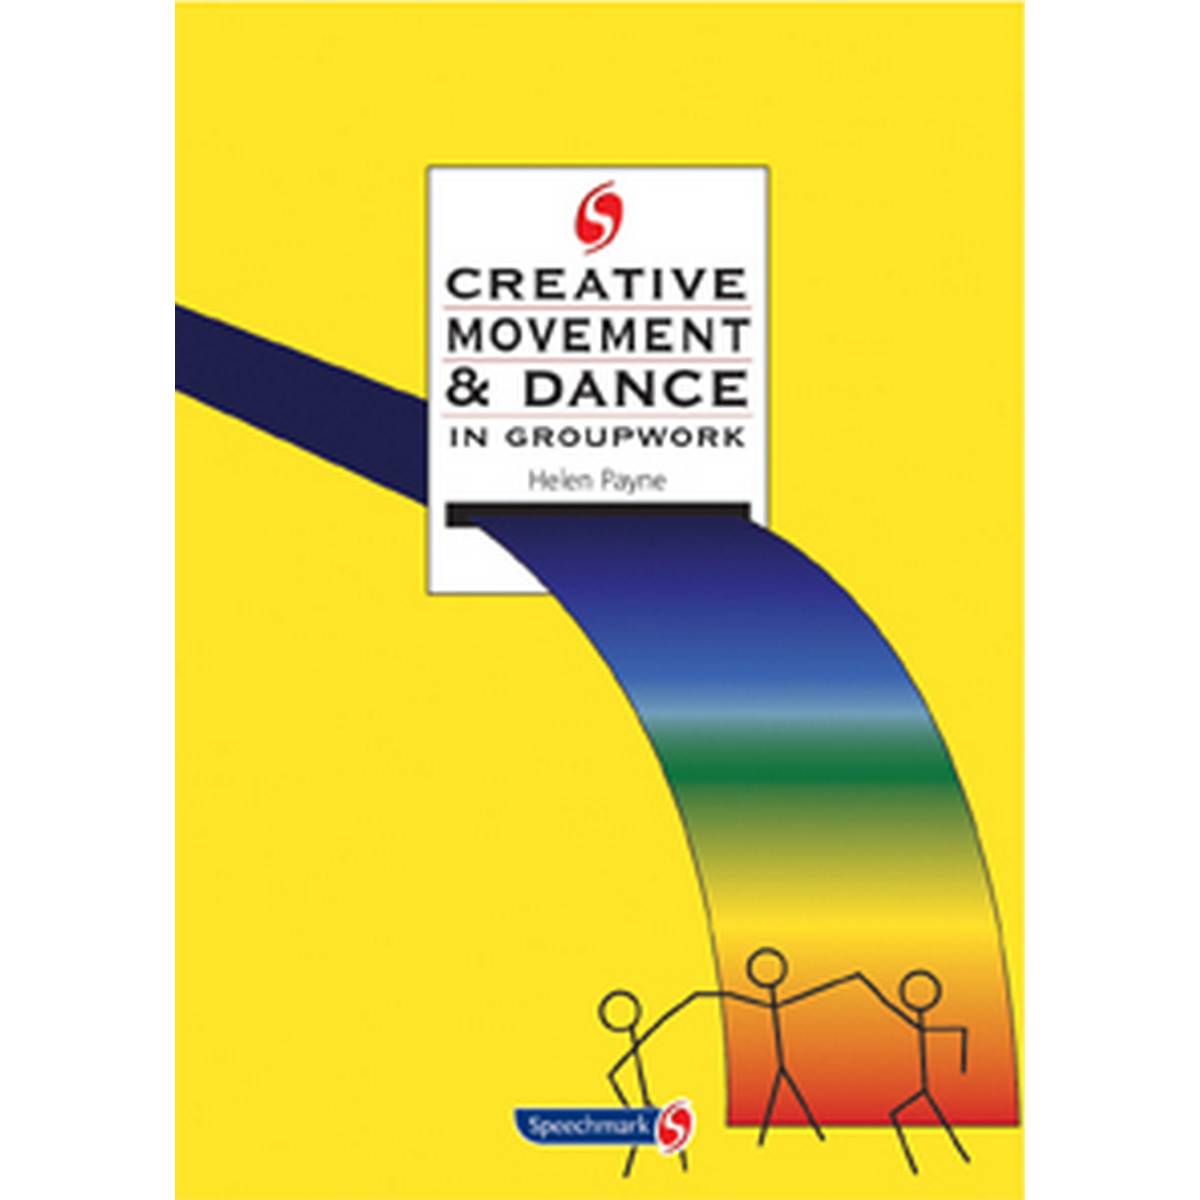 Creative Movement & Dance in Groupwork